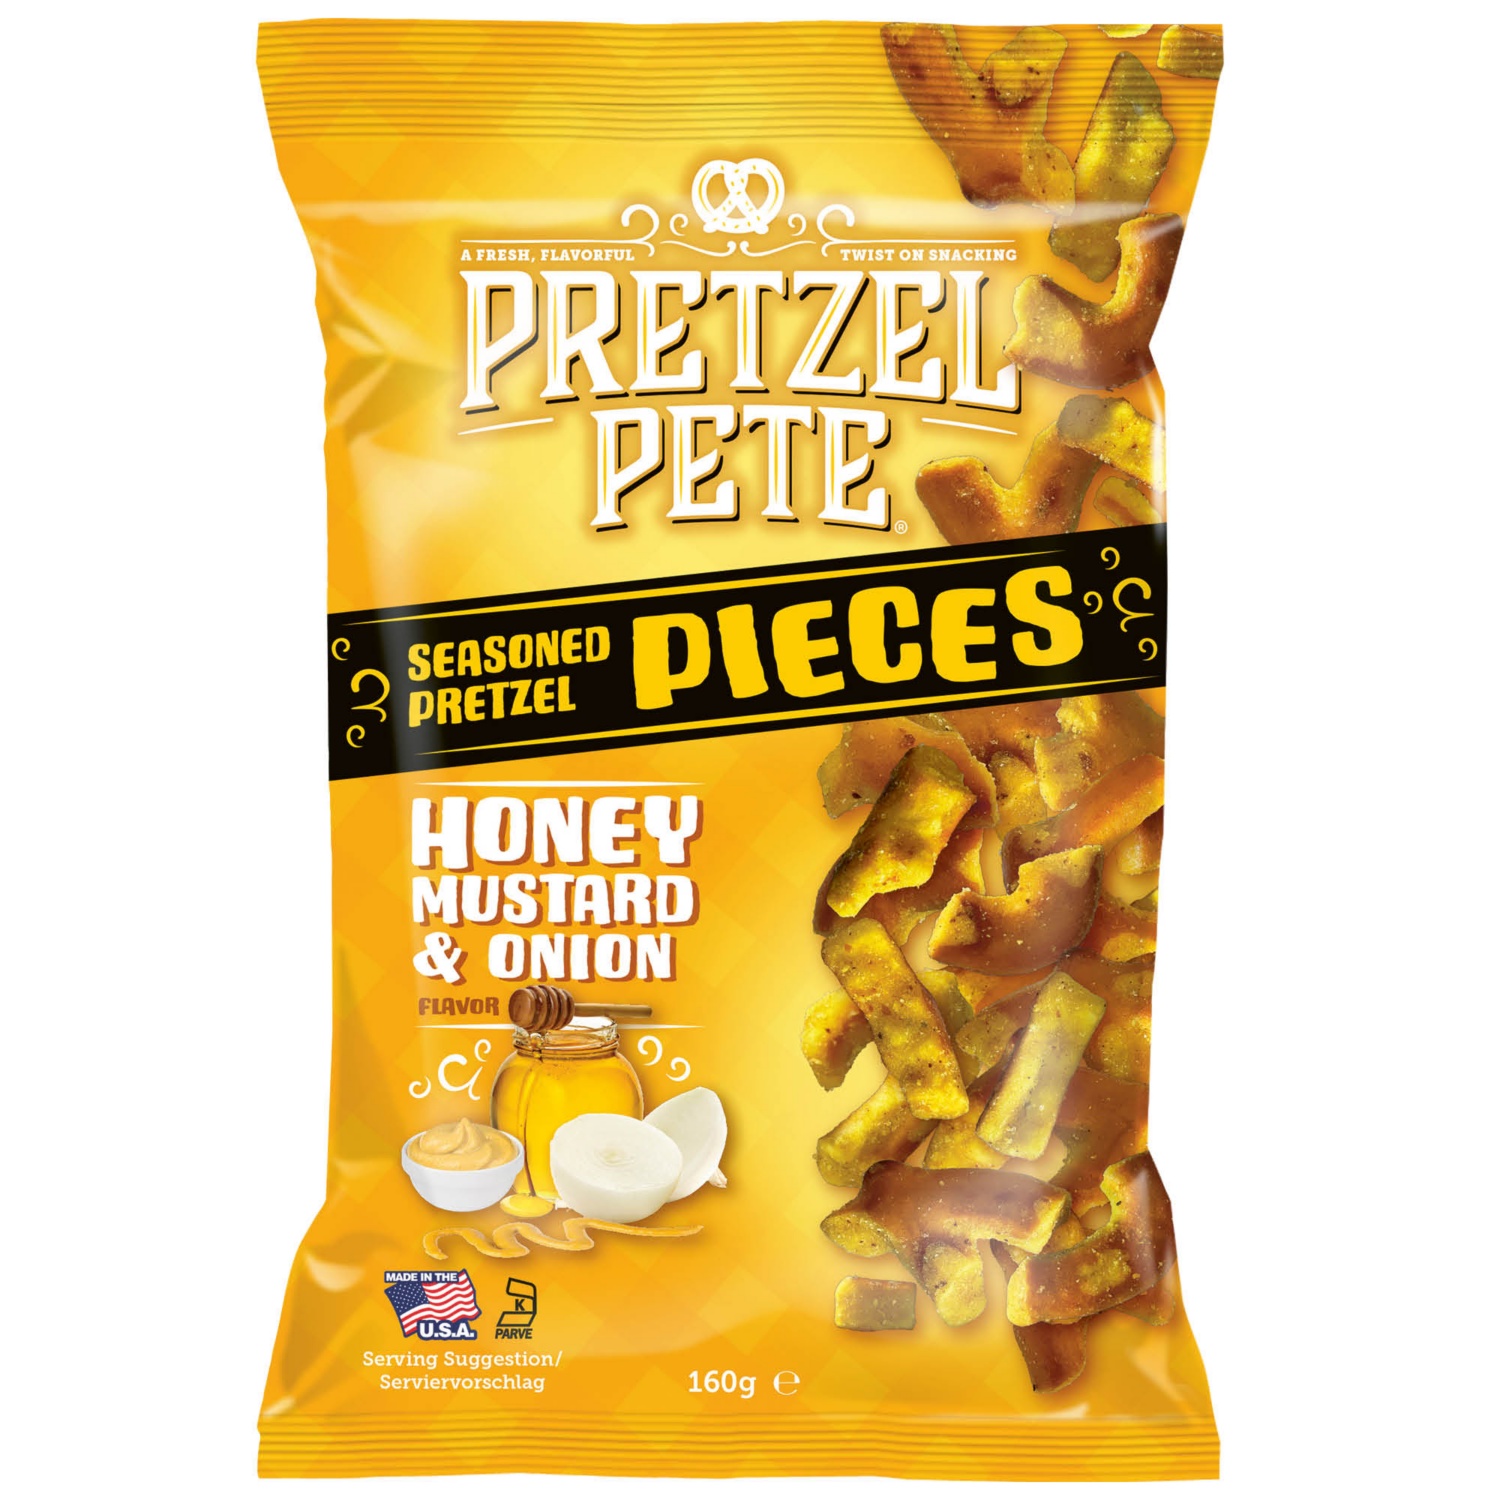 PRETZEL PETE Cracker, Honey Mustard